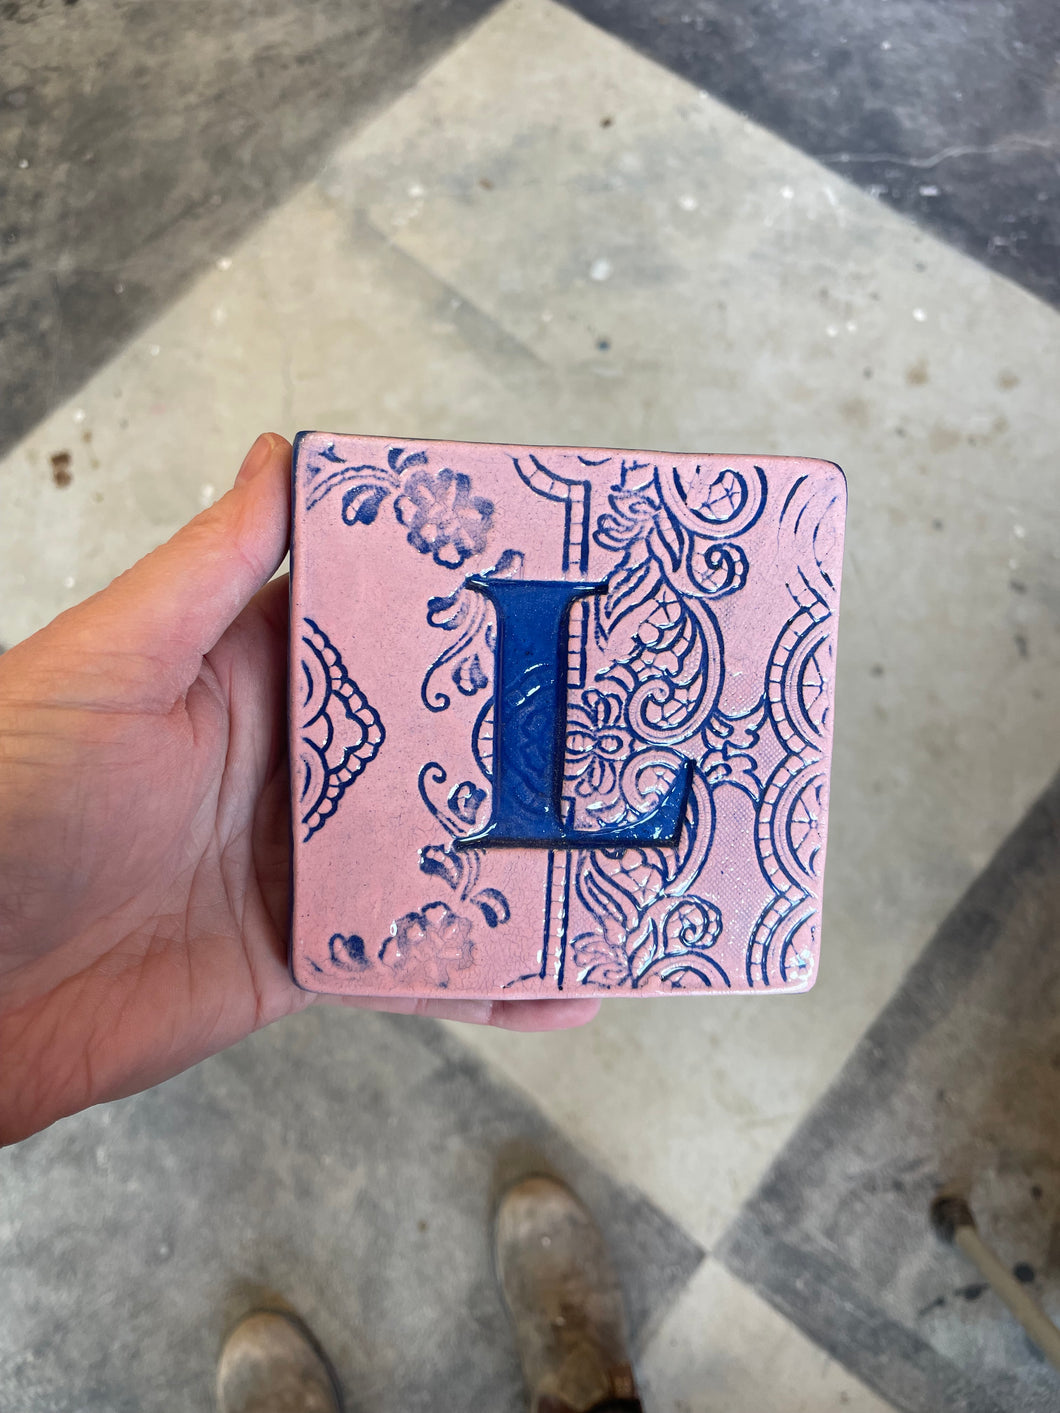 Letter L ceramic tile